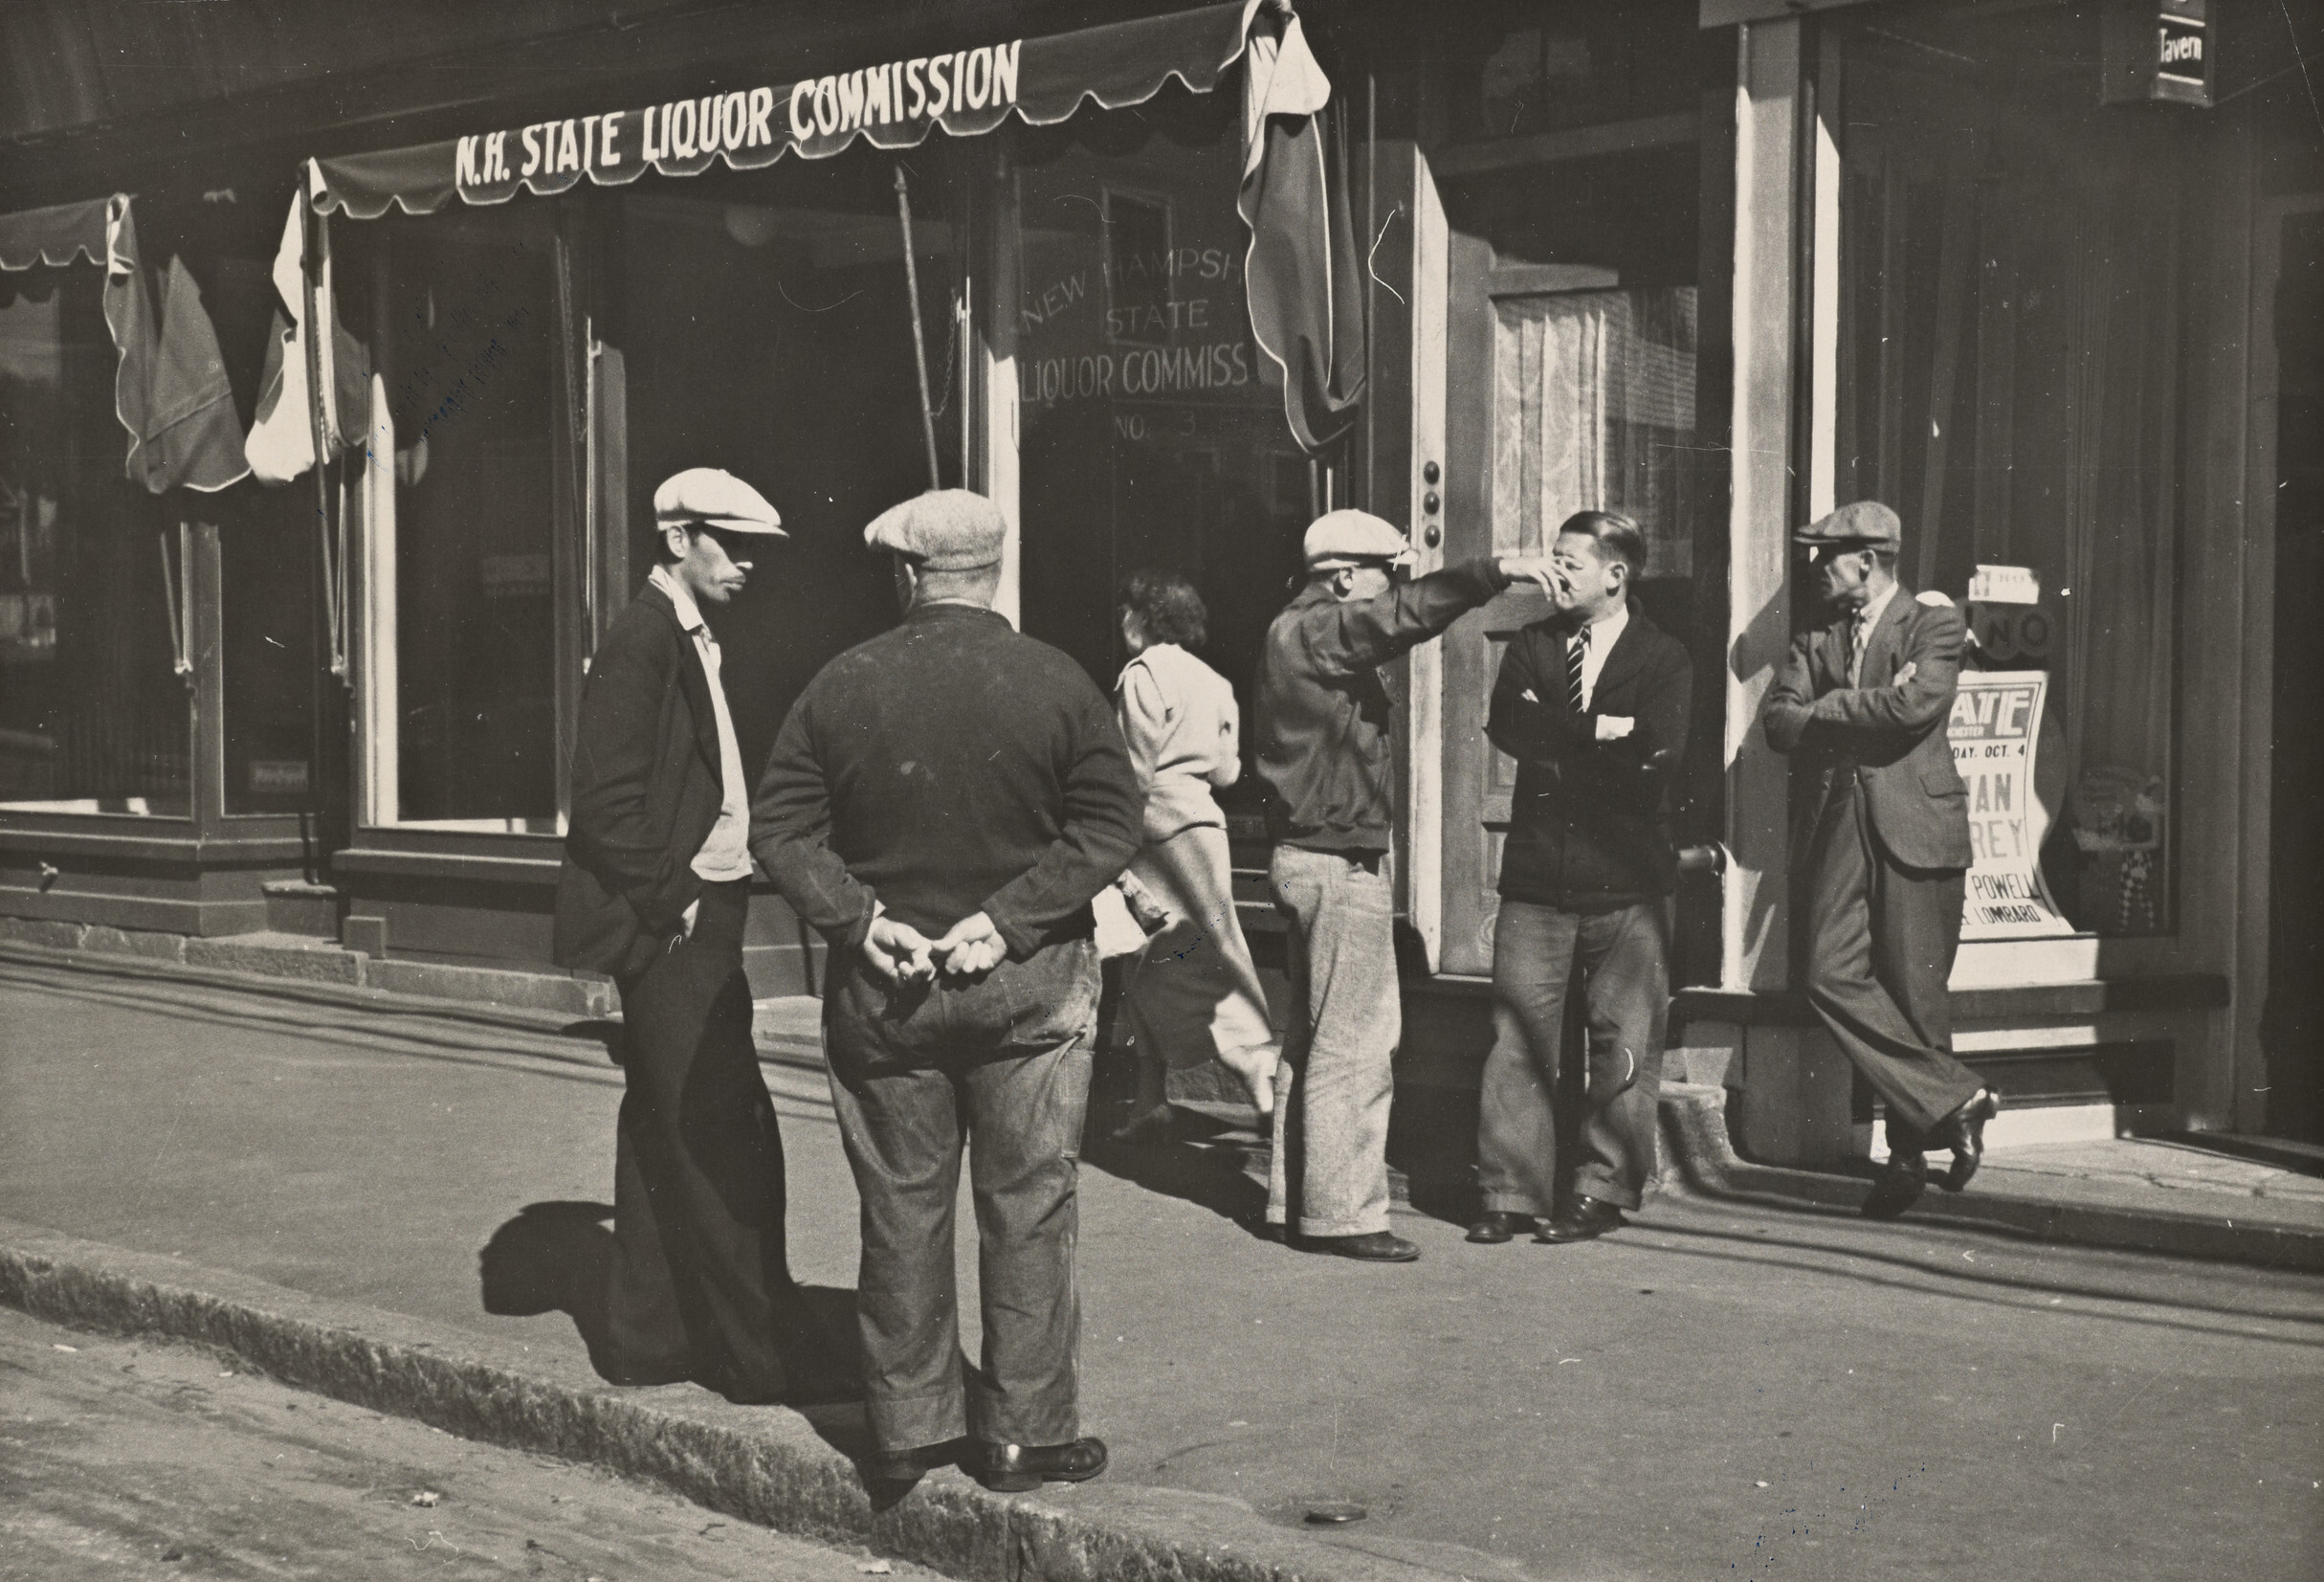 Комиссия по алкоголю, Манчестер, Нью-Гэмпшир, 1936. Фотограф Карл Миданс